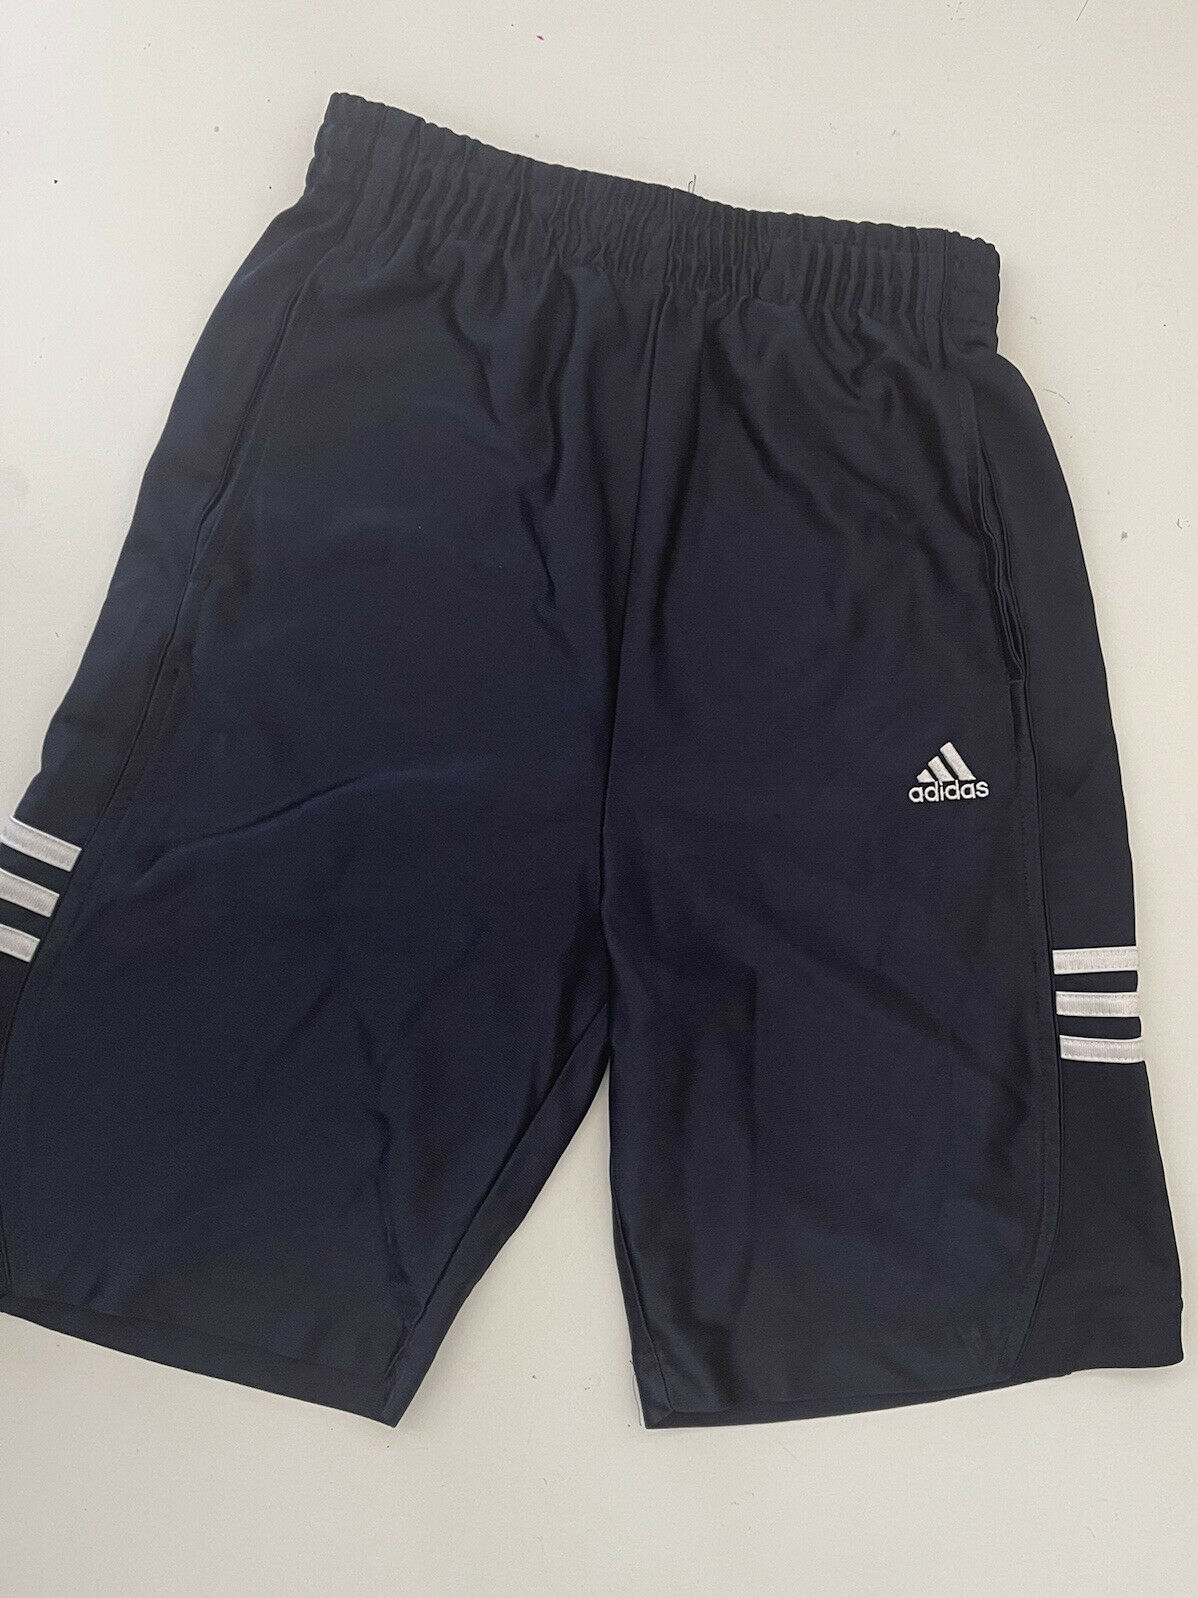 Adidas -athletic Boys Navy Athletic Shorts With Pockets Sz: Small